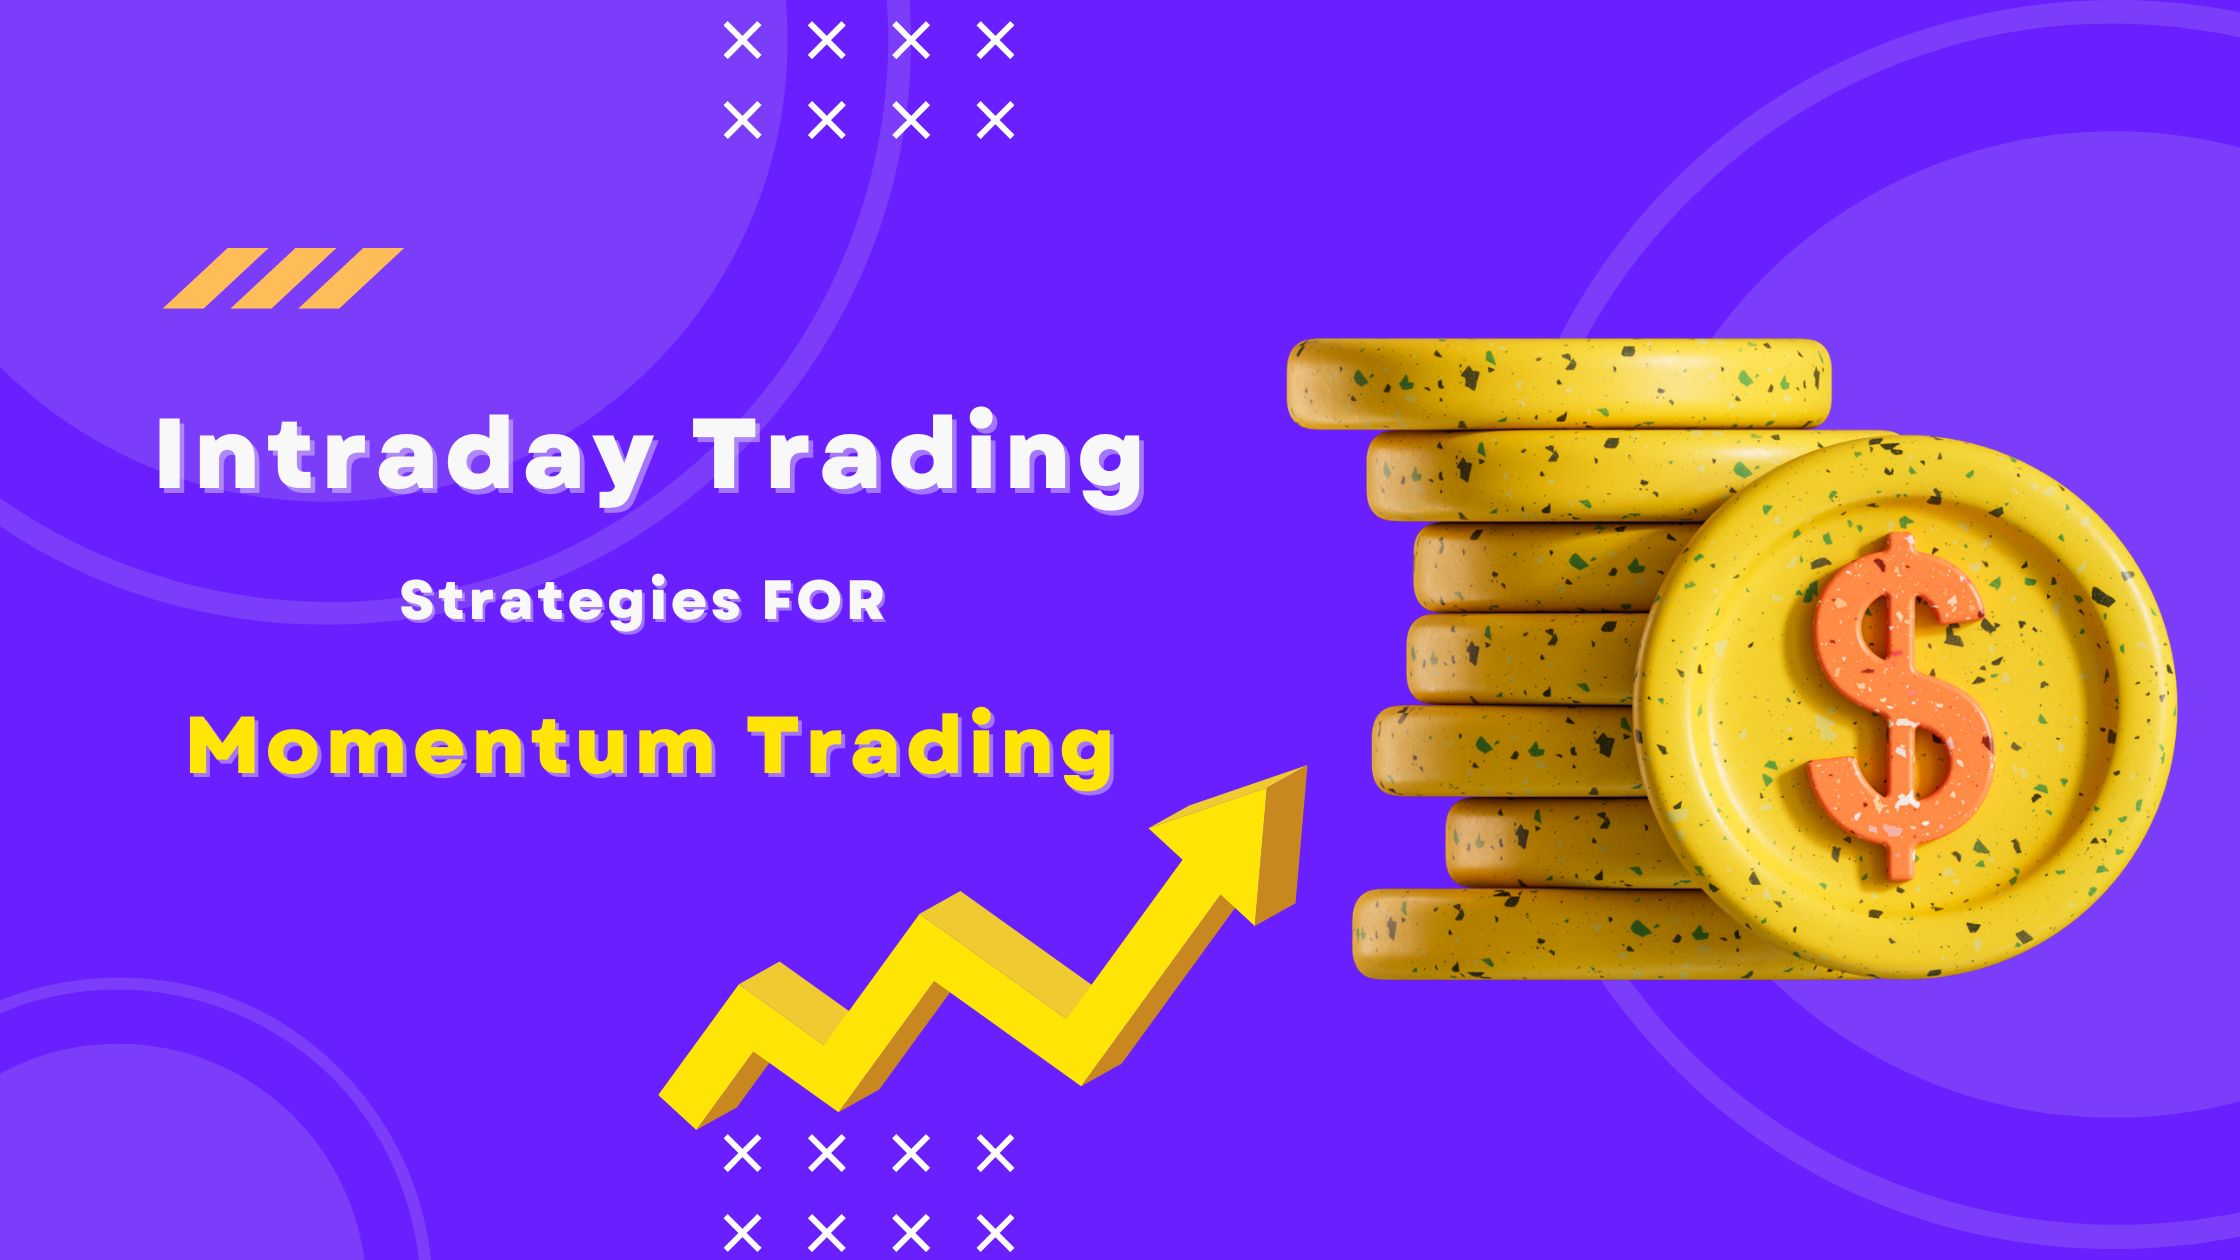 Intraday Trading Strategies: Momentum Trading